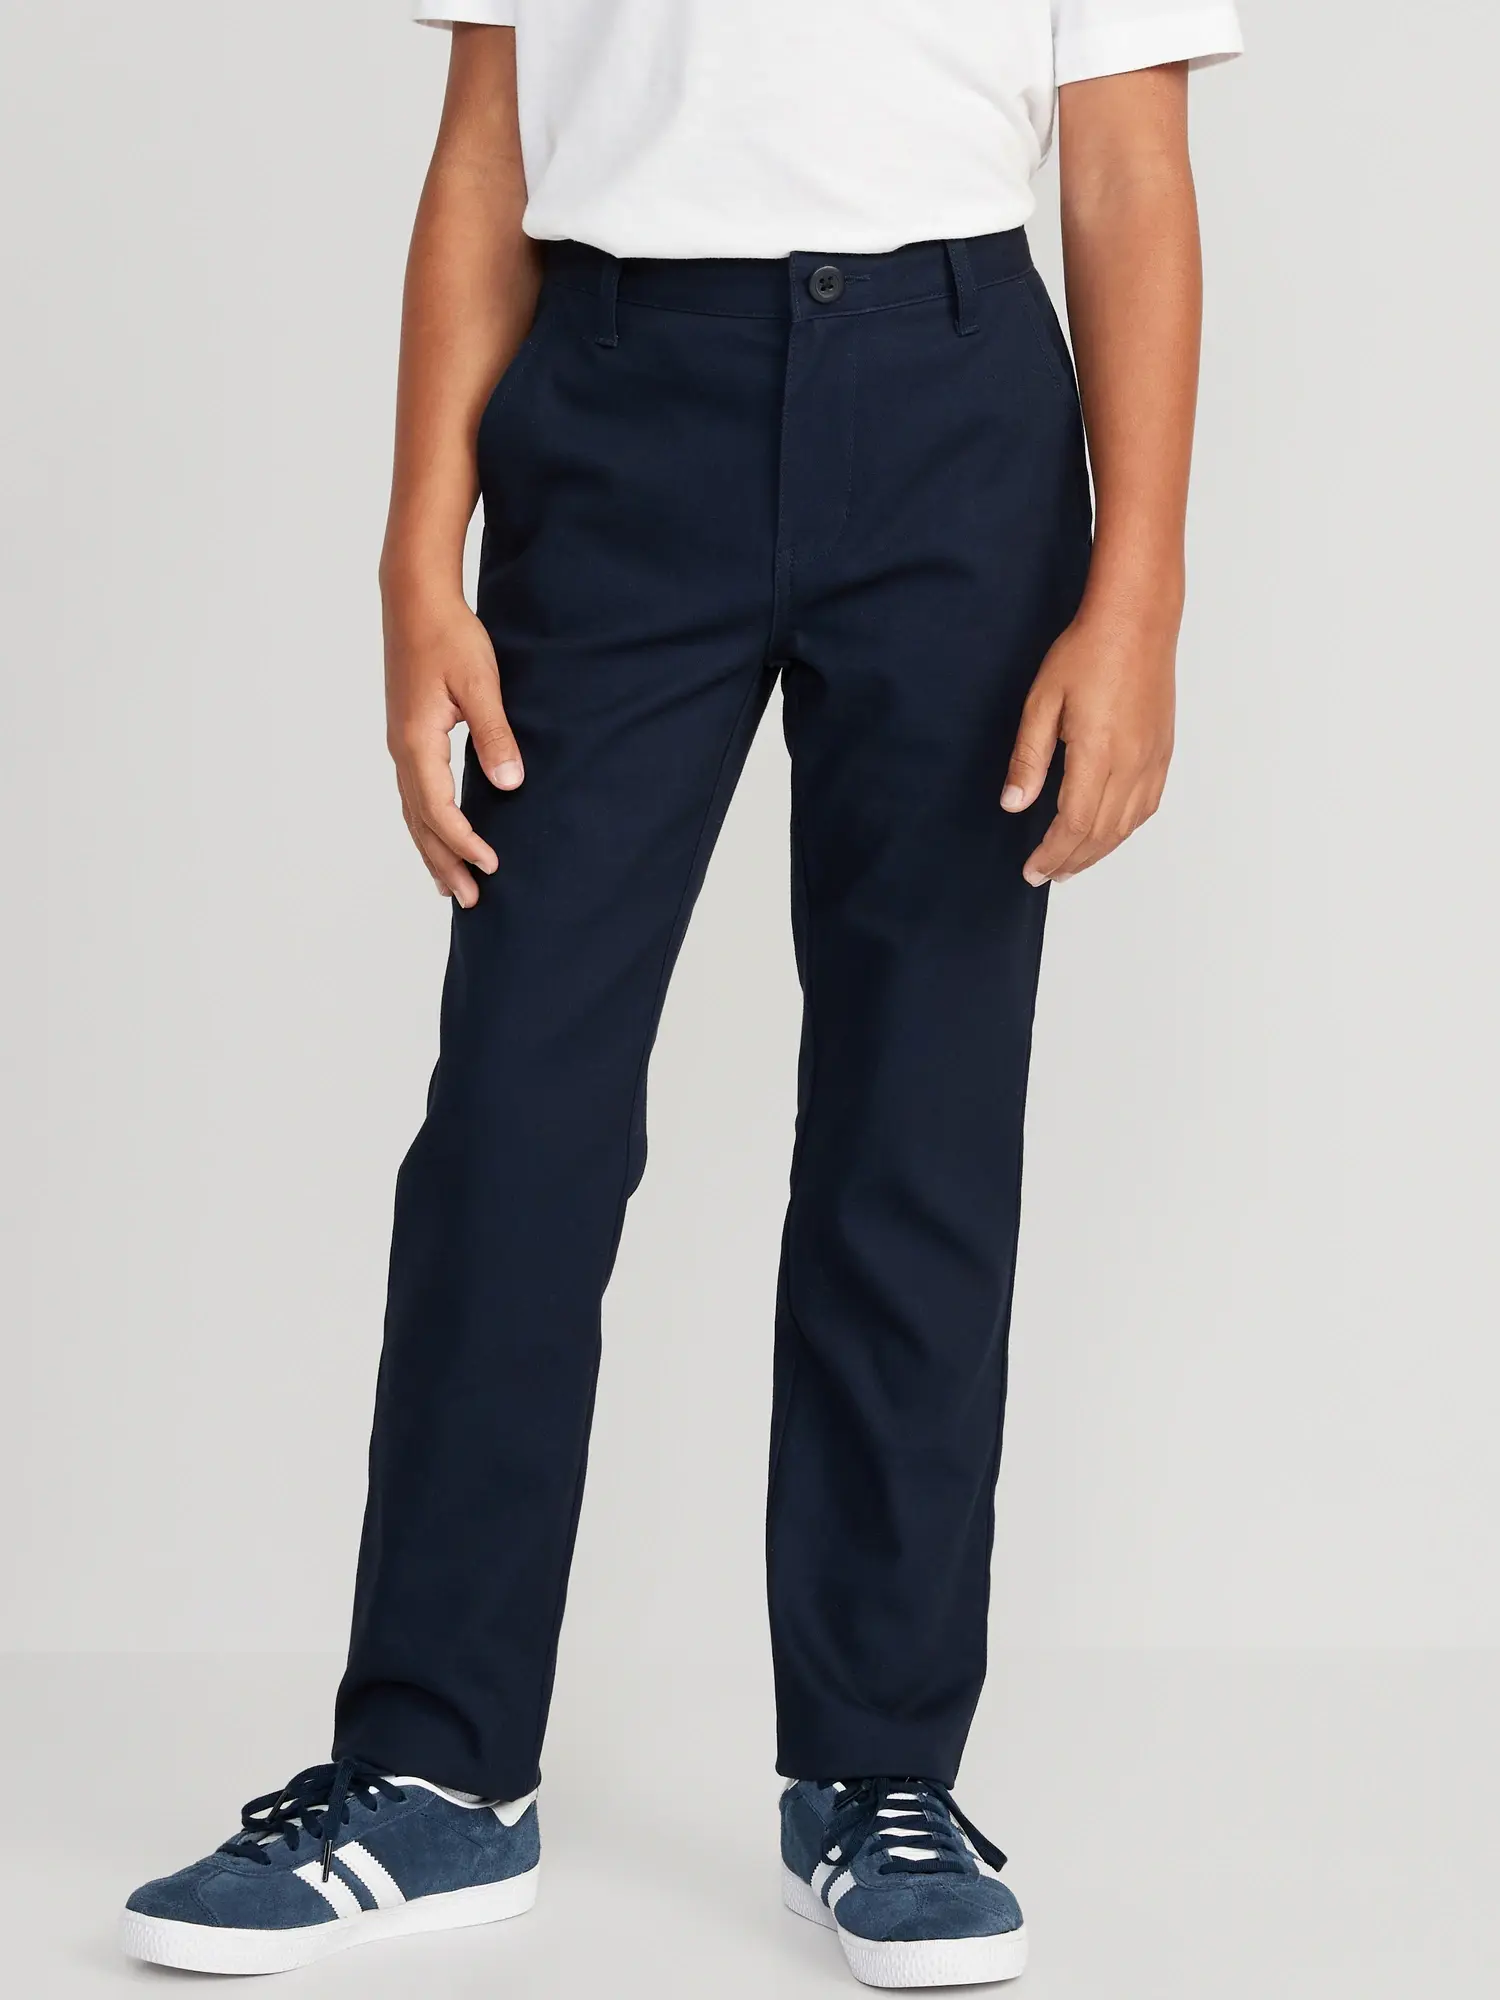 Old Navy Slim School Uniform Chino Pants for Boys blue. 1